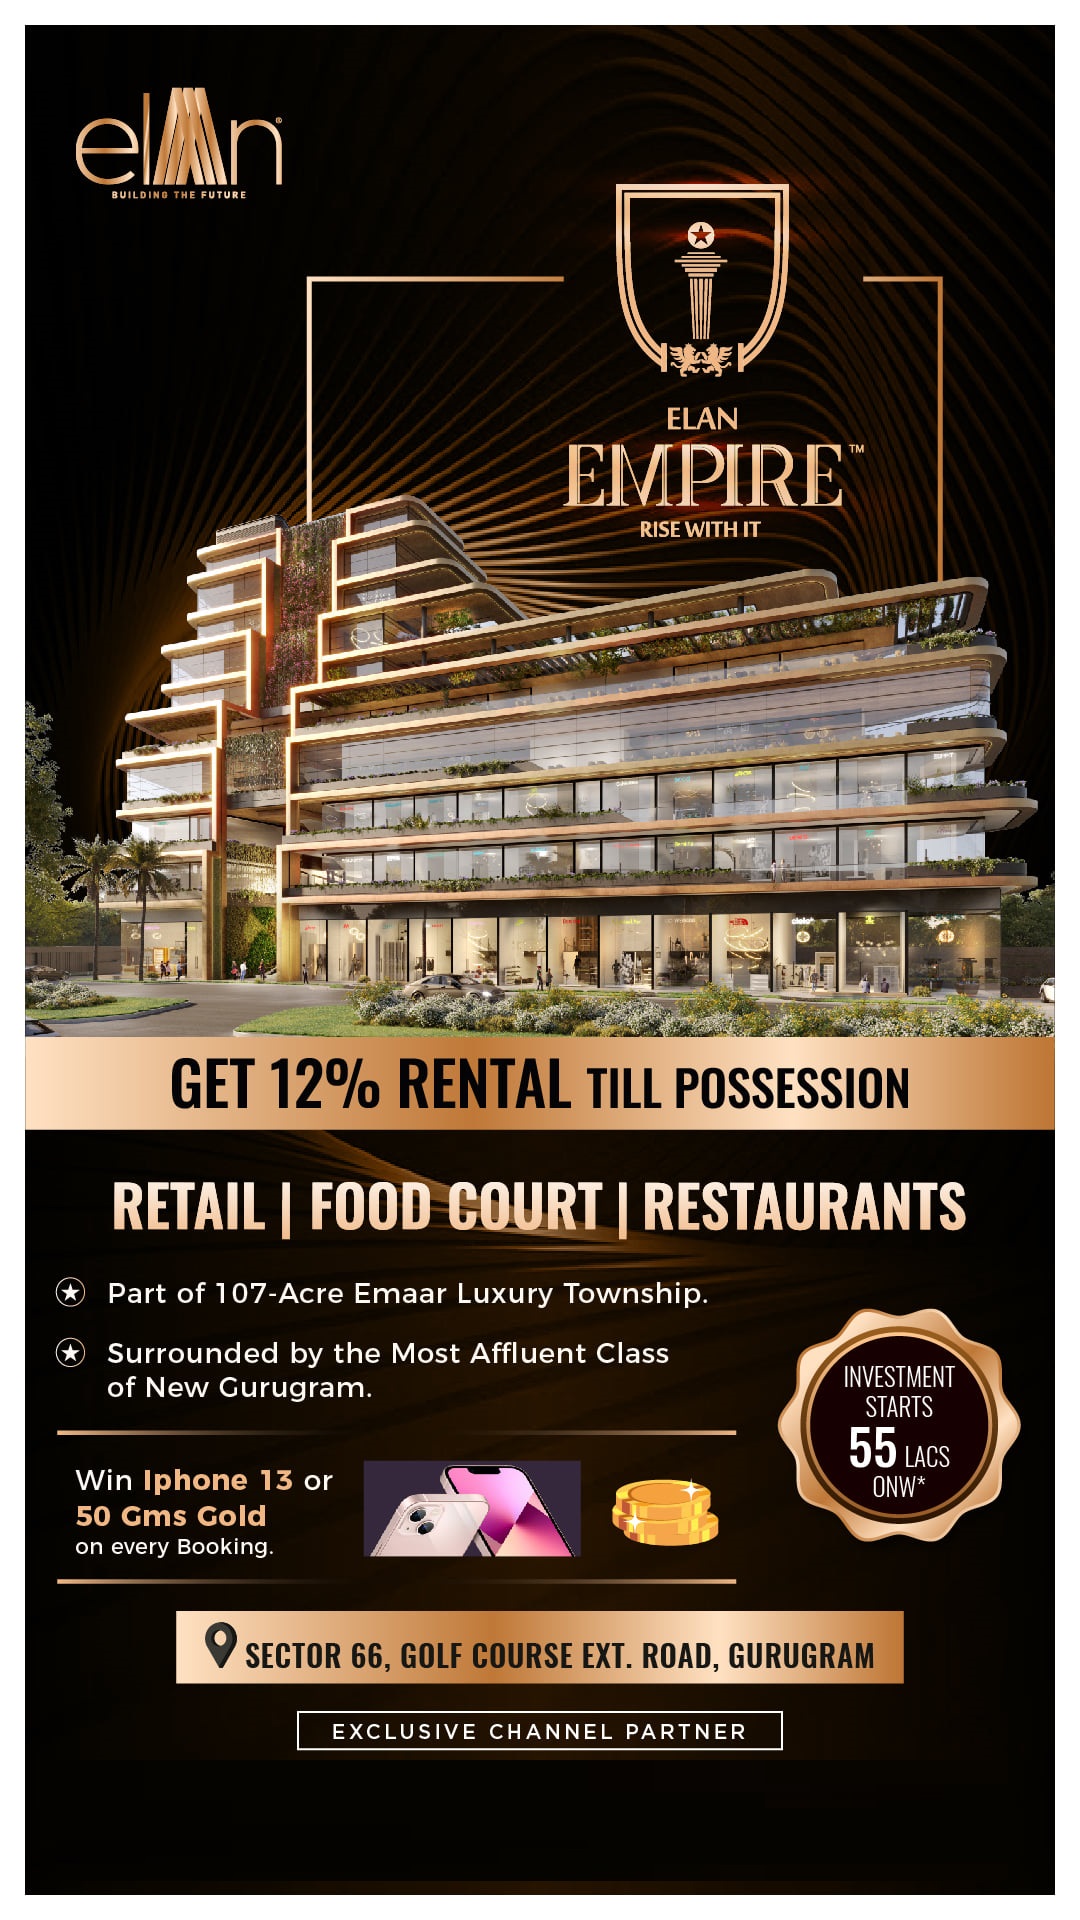 Get 12% rentals till possession at Elan Empire in Sector 66, Gurgaon